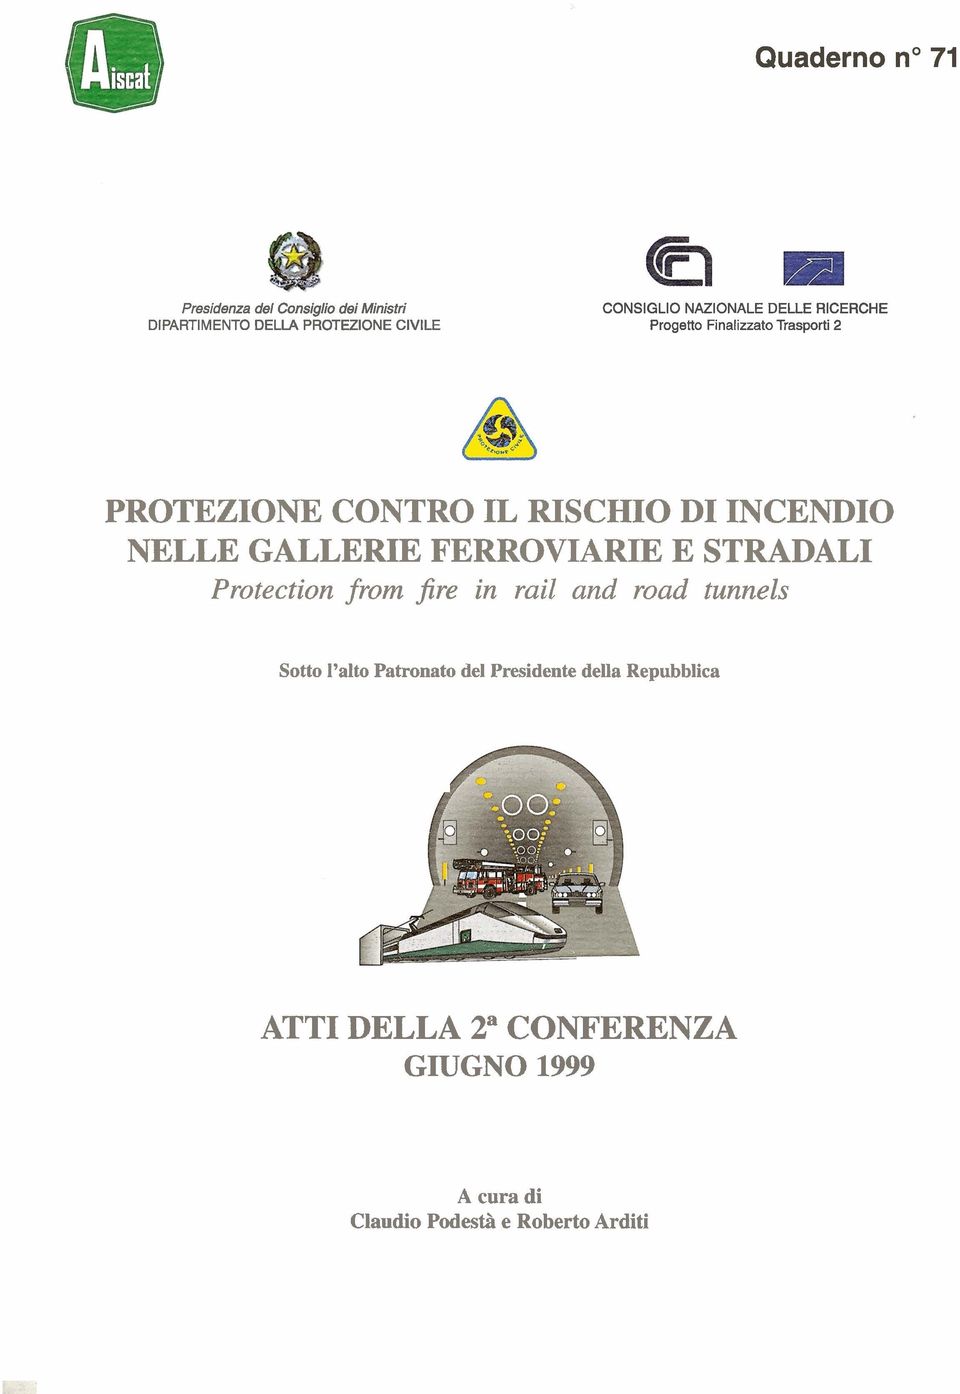 NELLE GALLERIE FERROVIARIE E STRADALI Protection from $re in rail and road tunnels Sotto l'alto